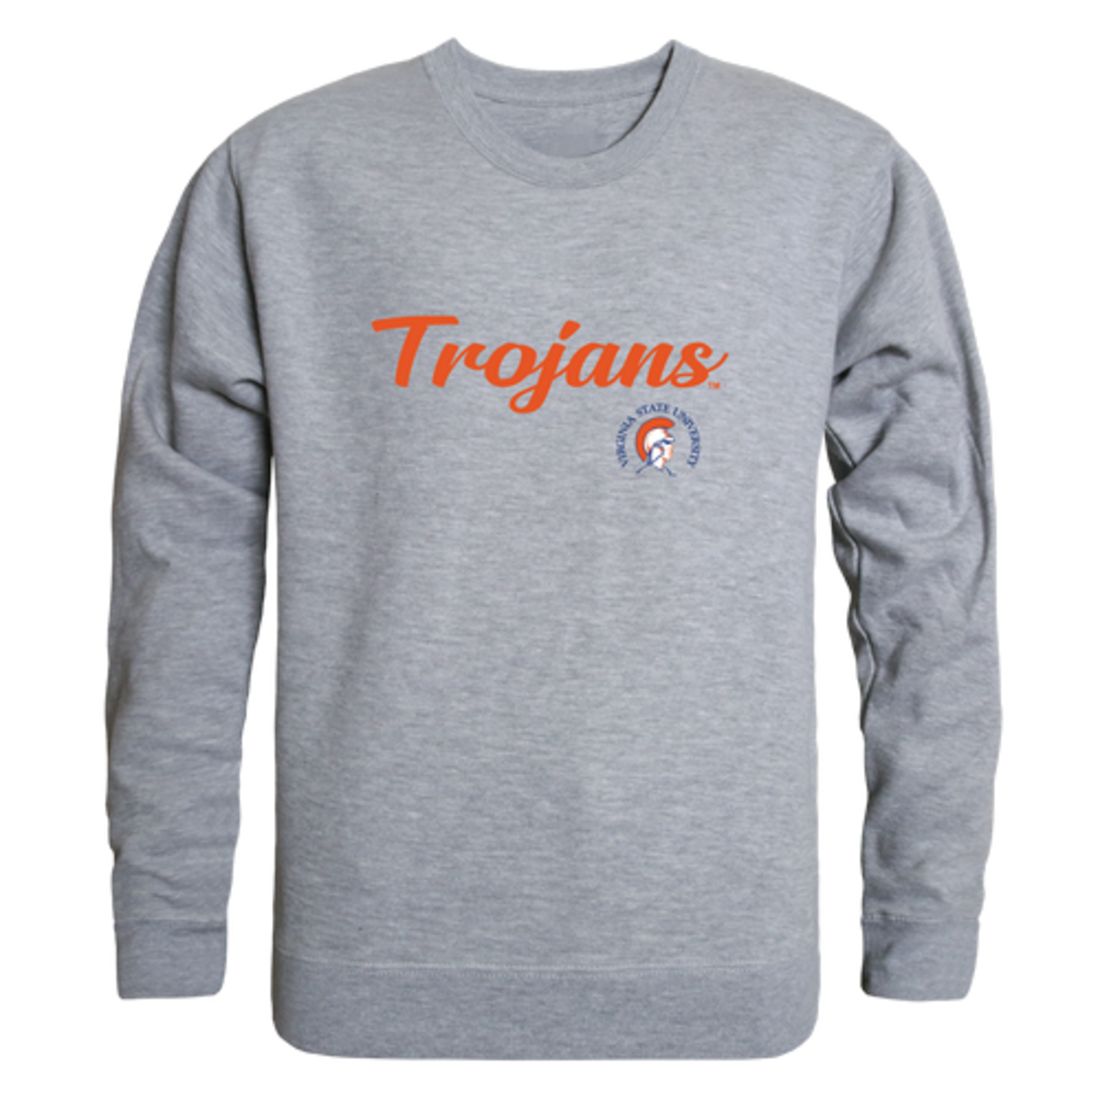 Virginia-State-University-Trojans-Script-Fleece-Crewneck-Pullover-Sweatshirt